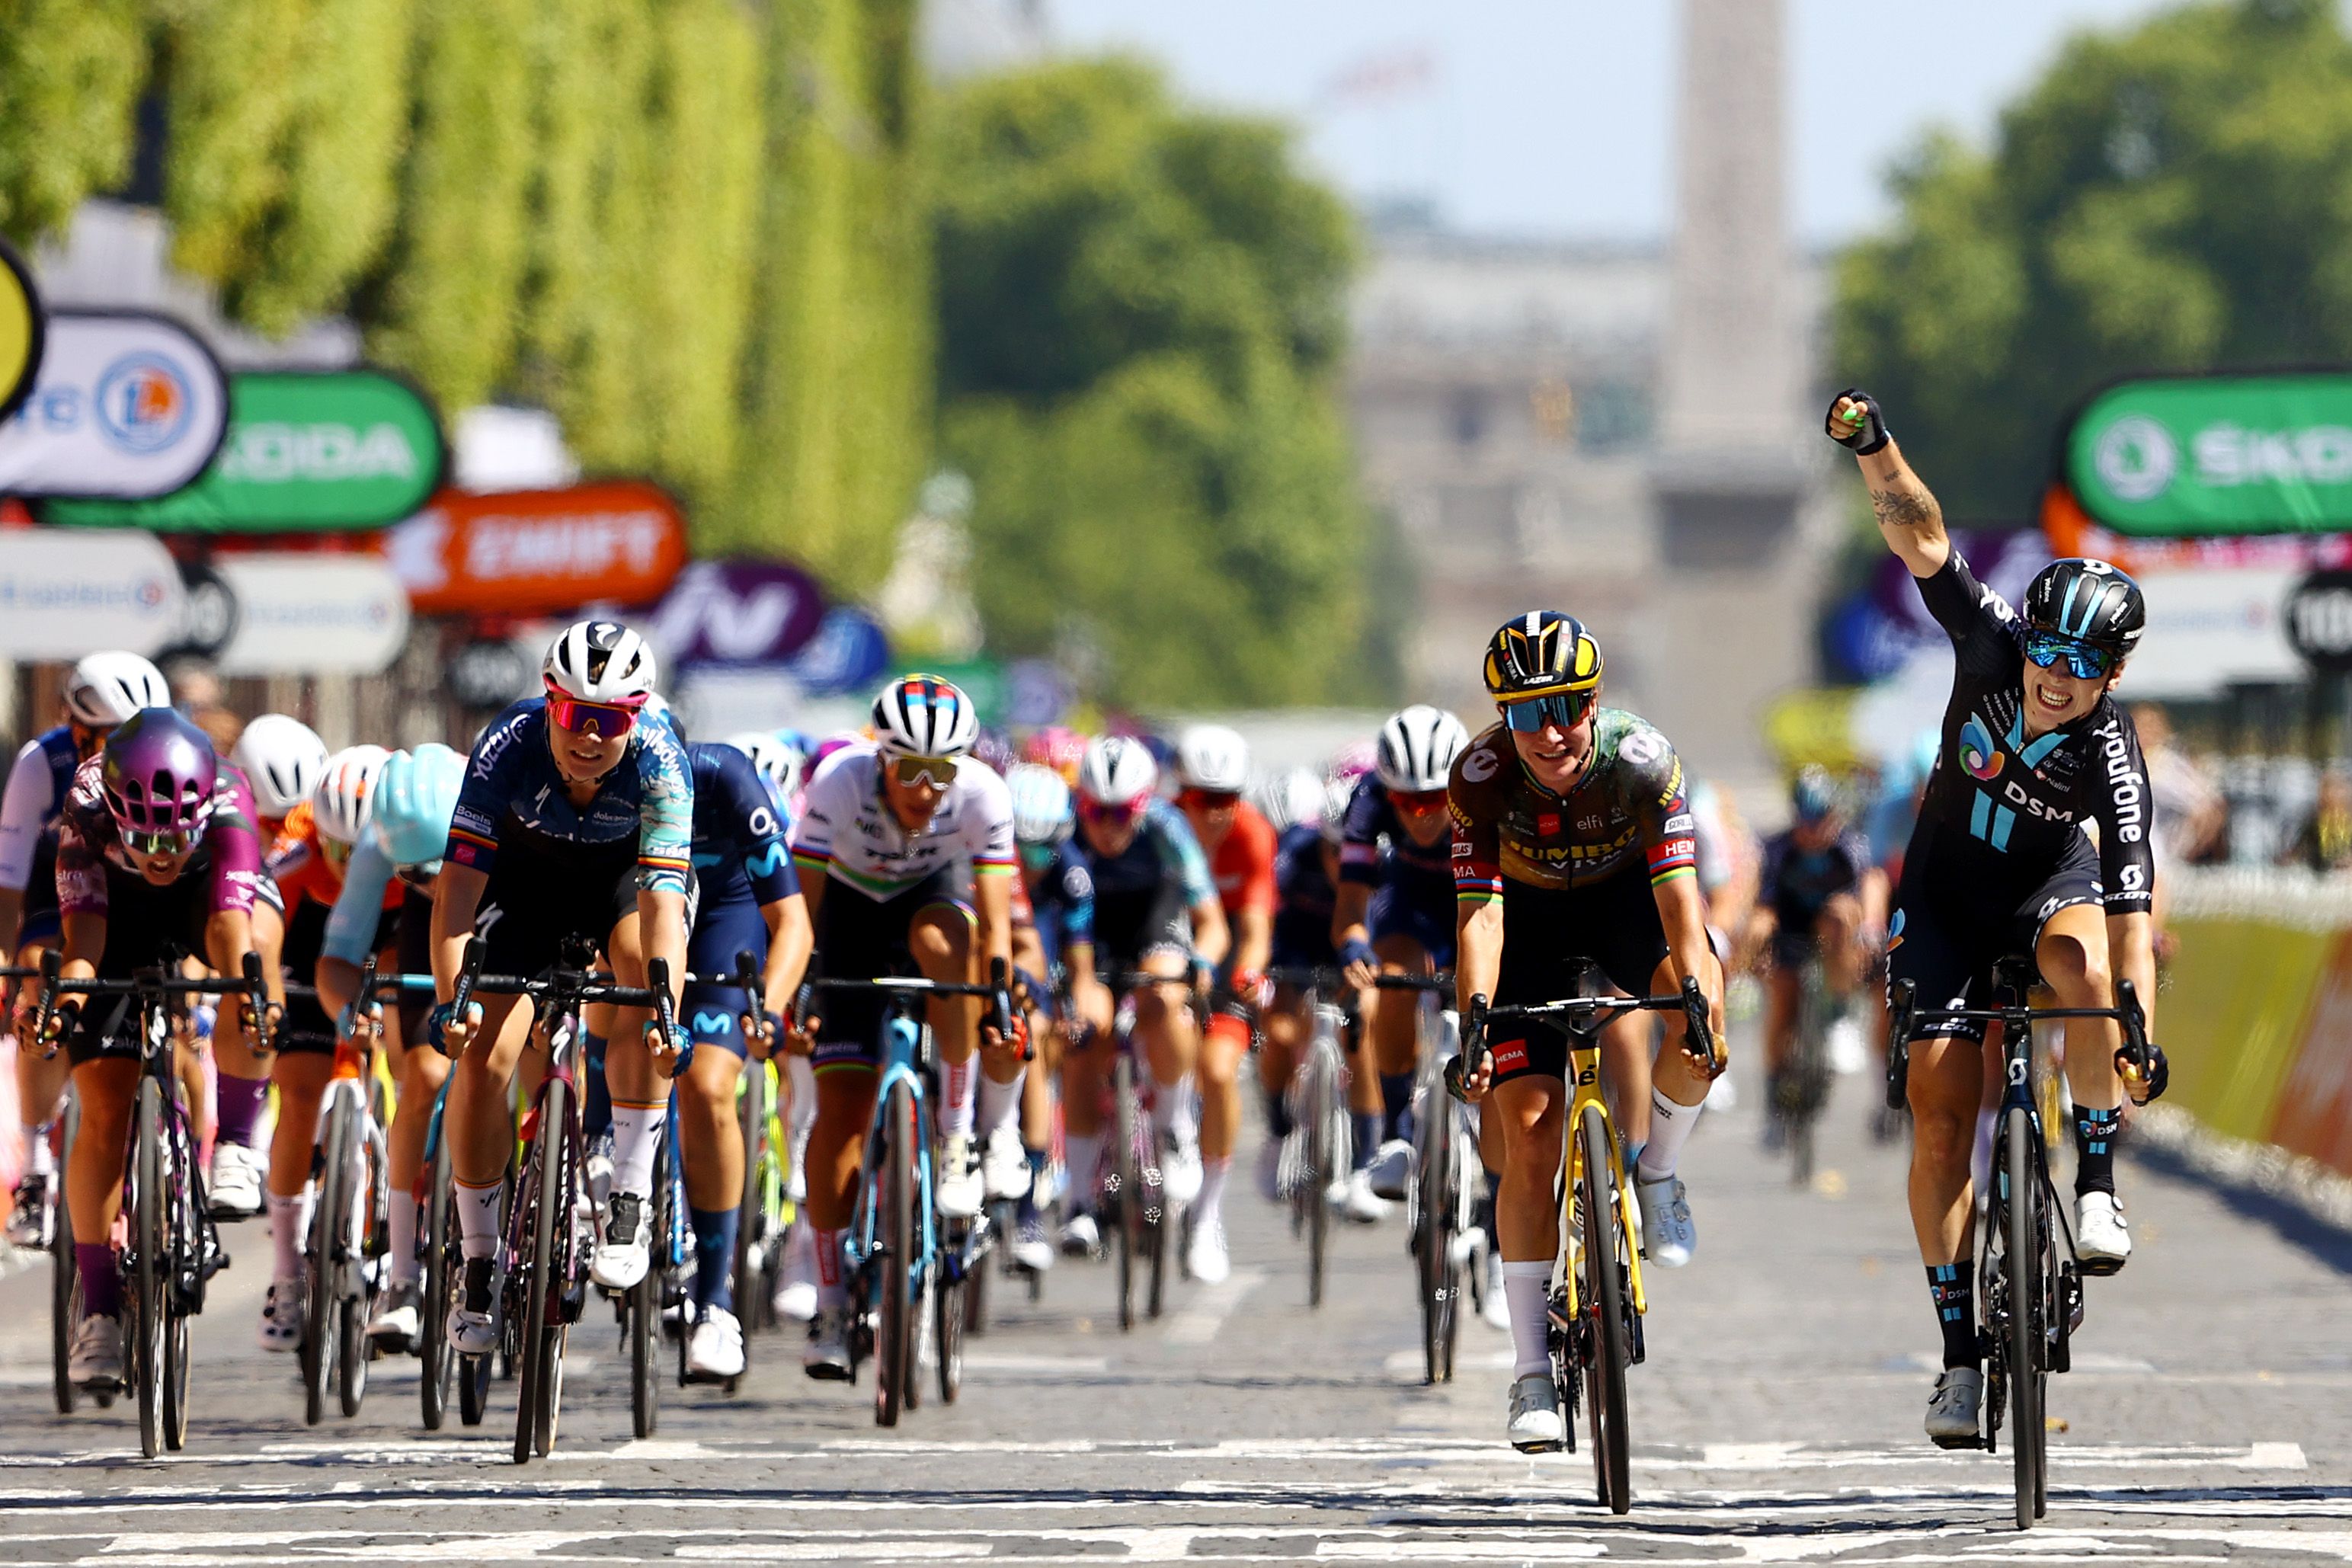 Who Is Winning The Tour De France Femmes?